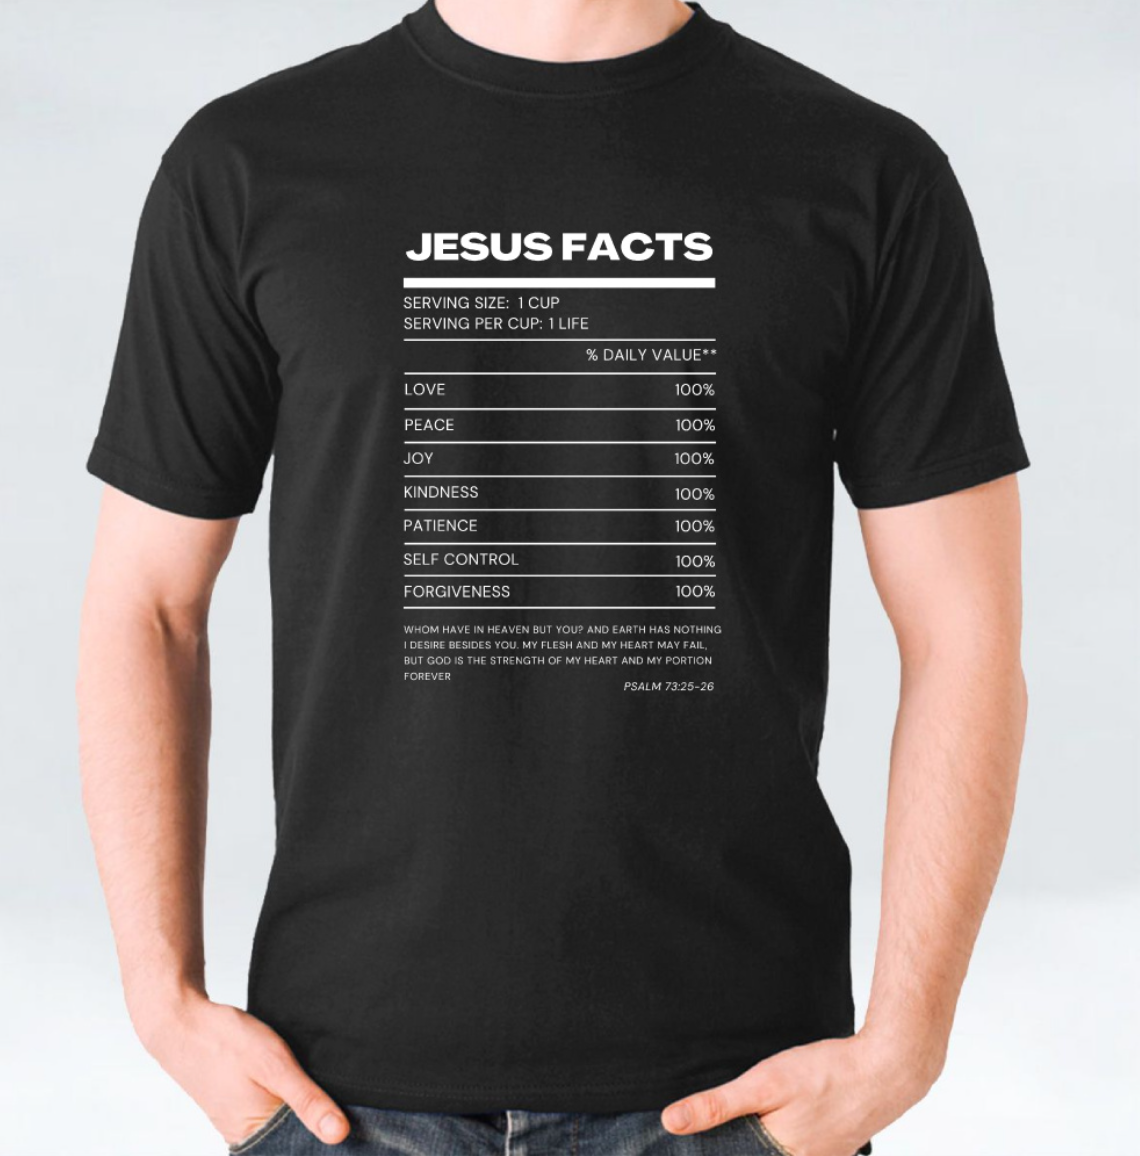 Jesus Facts Unisex T-shirt - White/Black/Maroon